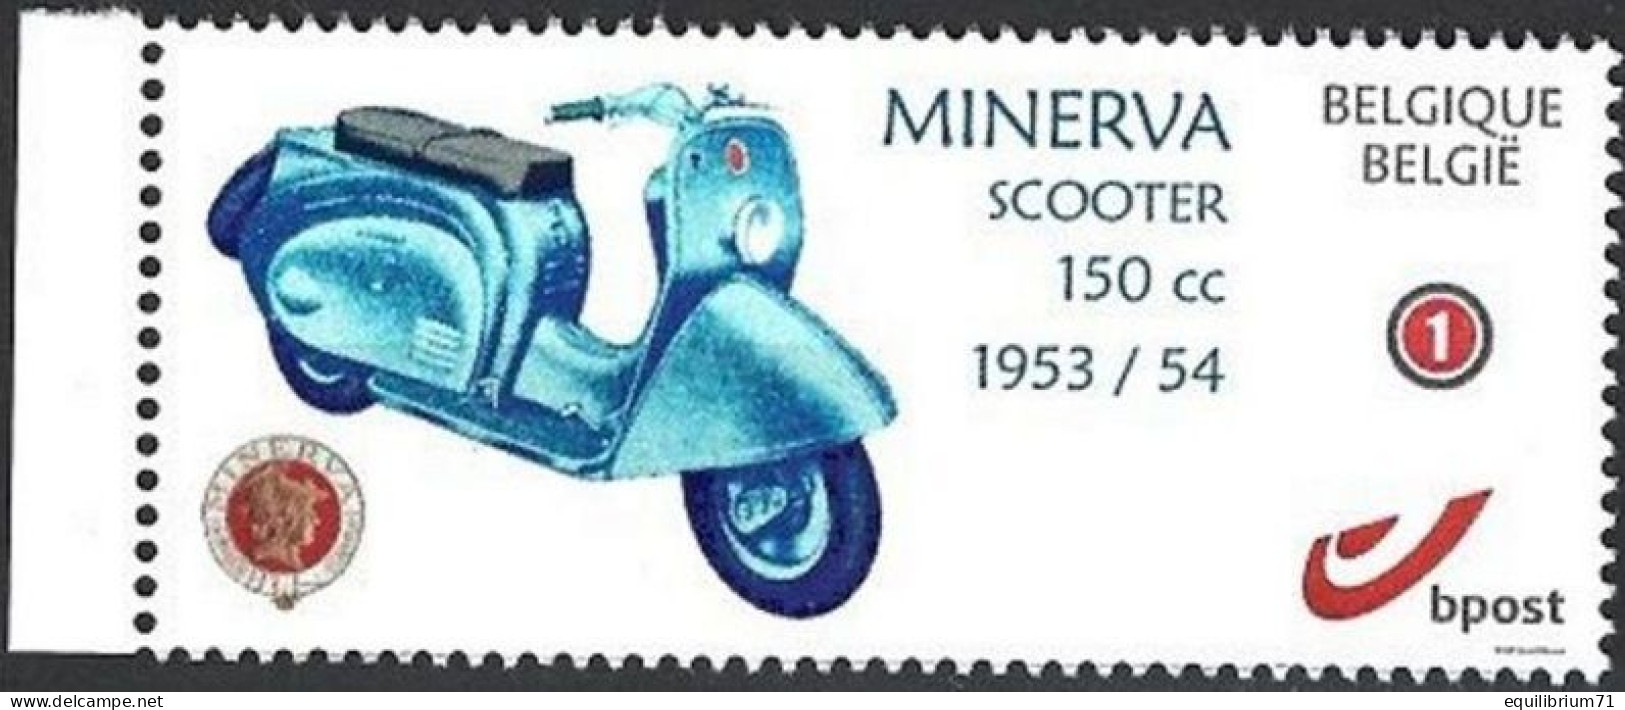 DUOSTAMP** / MYSTAMP** - Minerva Scooter 150CC - 1953/1954 - Motorbikes